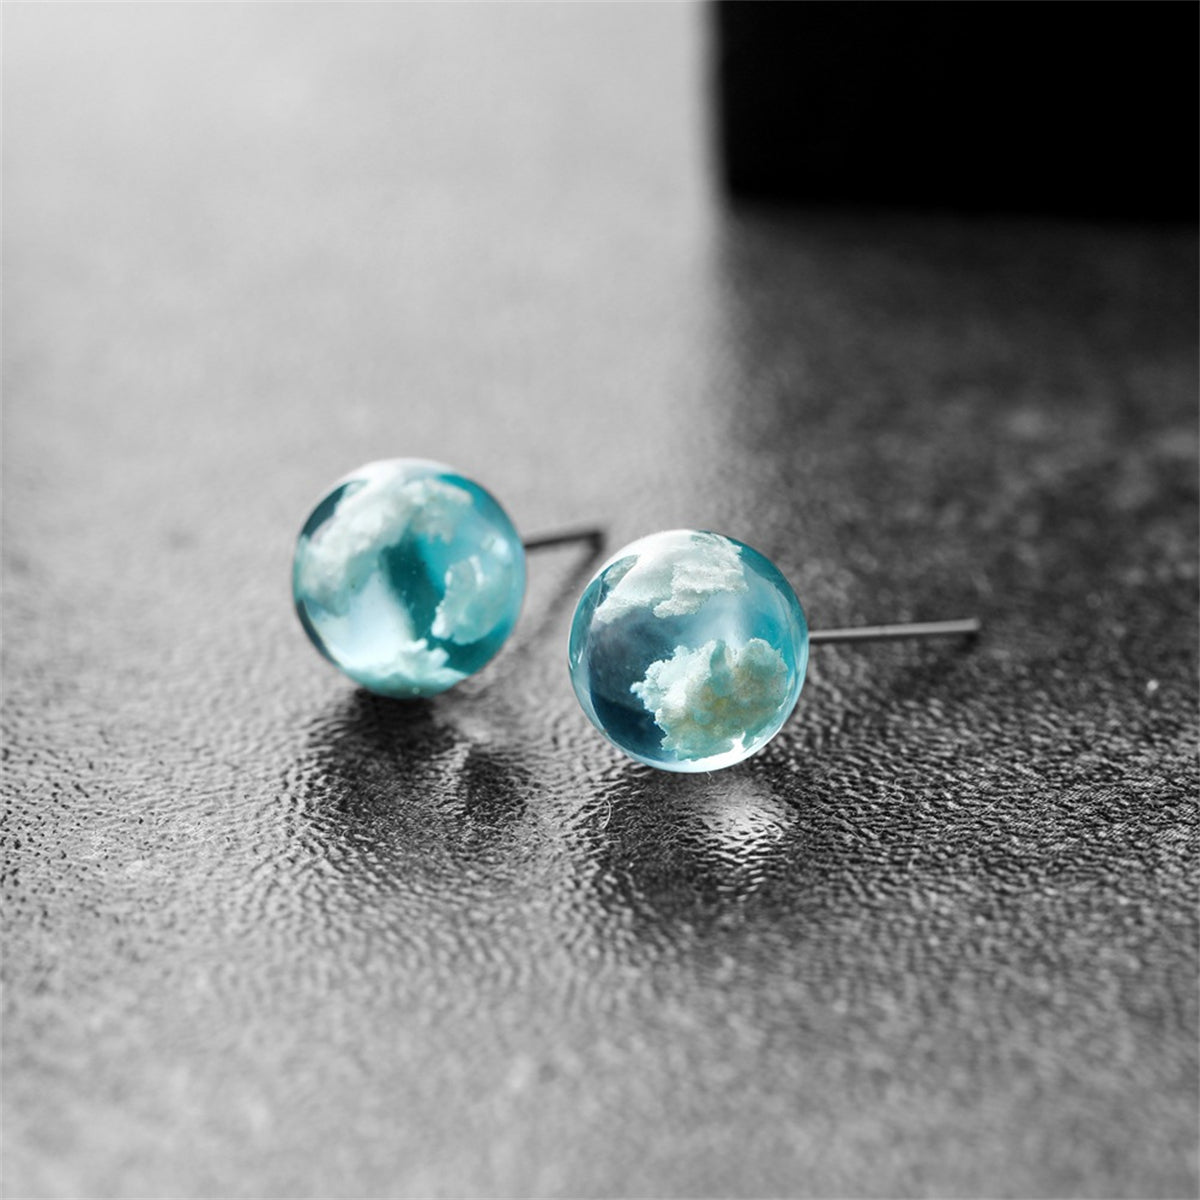 Blue & White Cloud Ball Stud Earrings